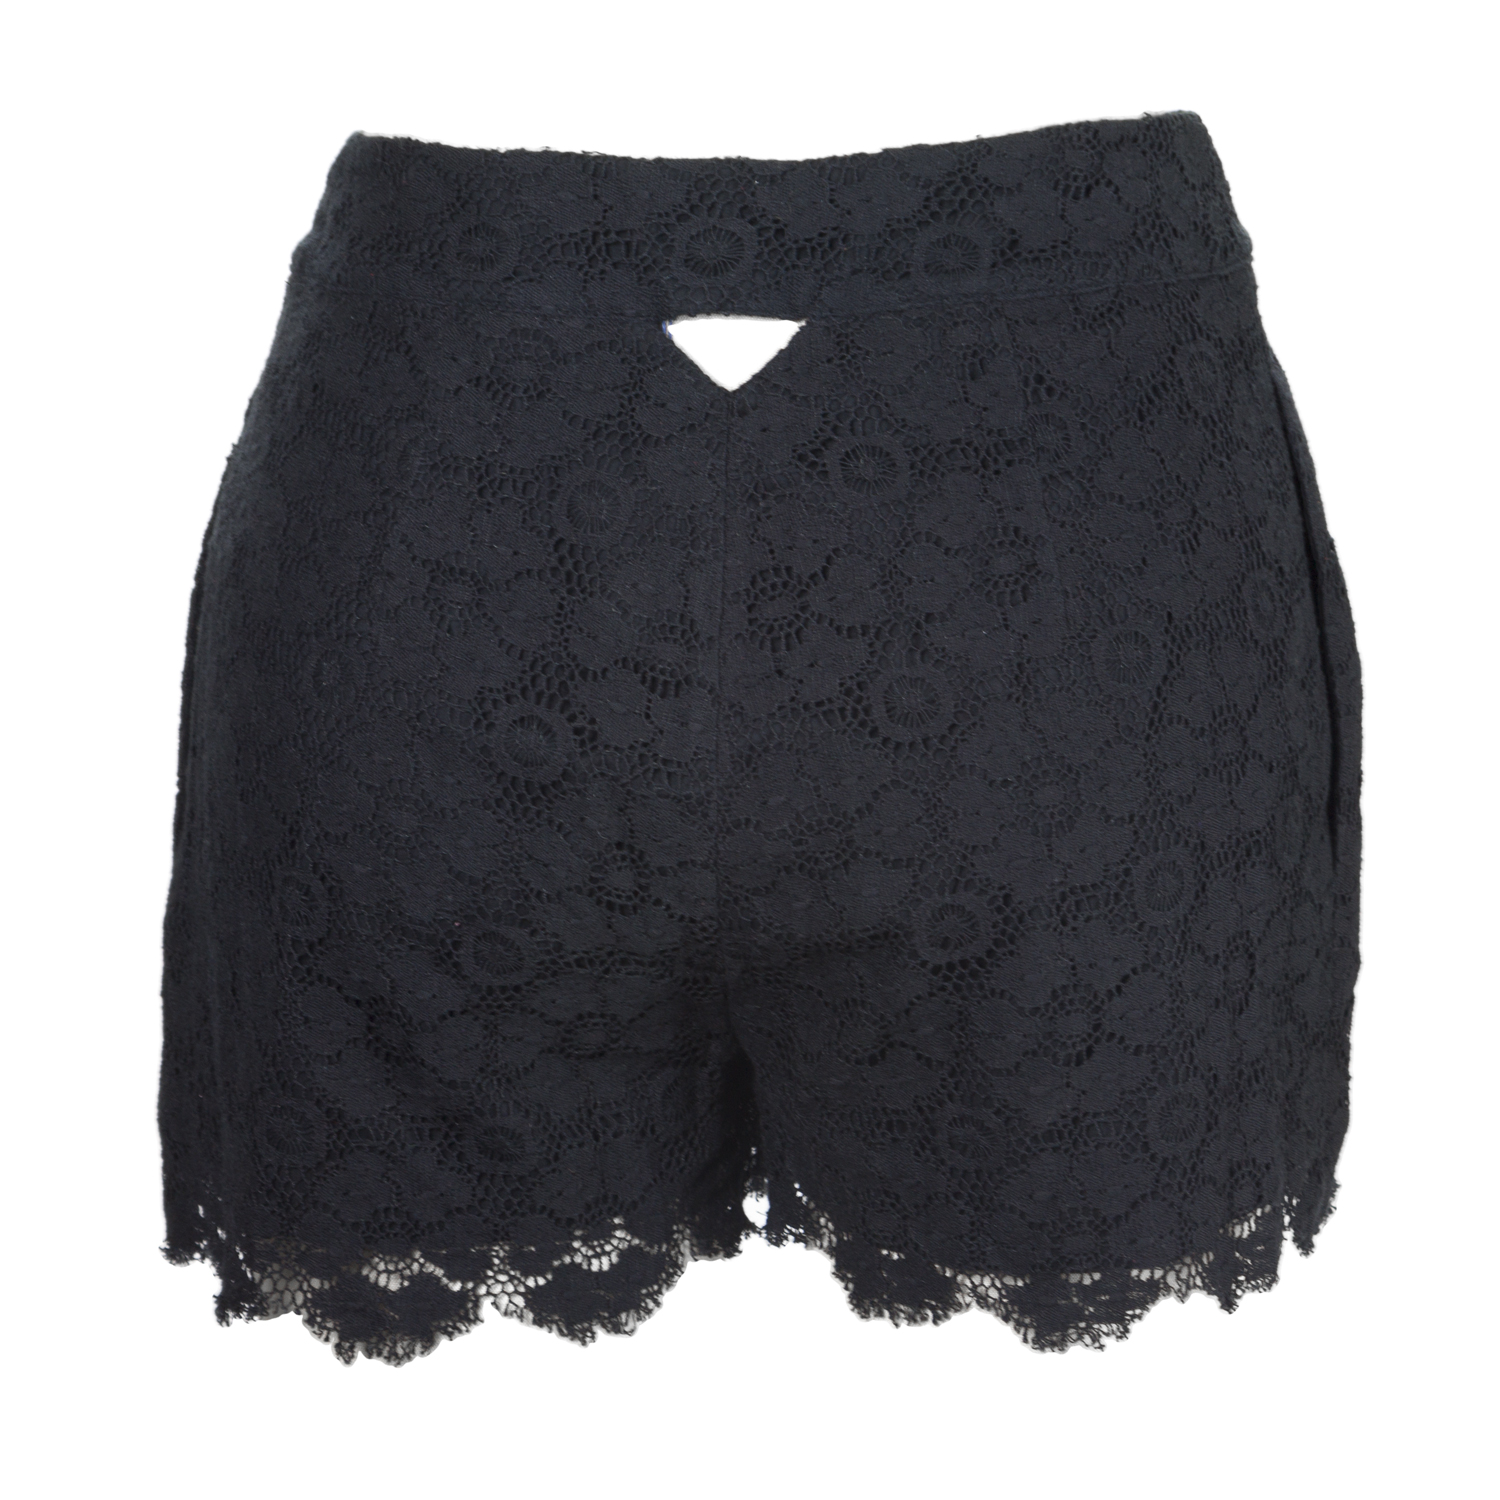 REBECCA MINKOFF Women's Black Lace Hali Cut Out Shorts Sz 2 $298 NWT ...